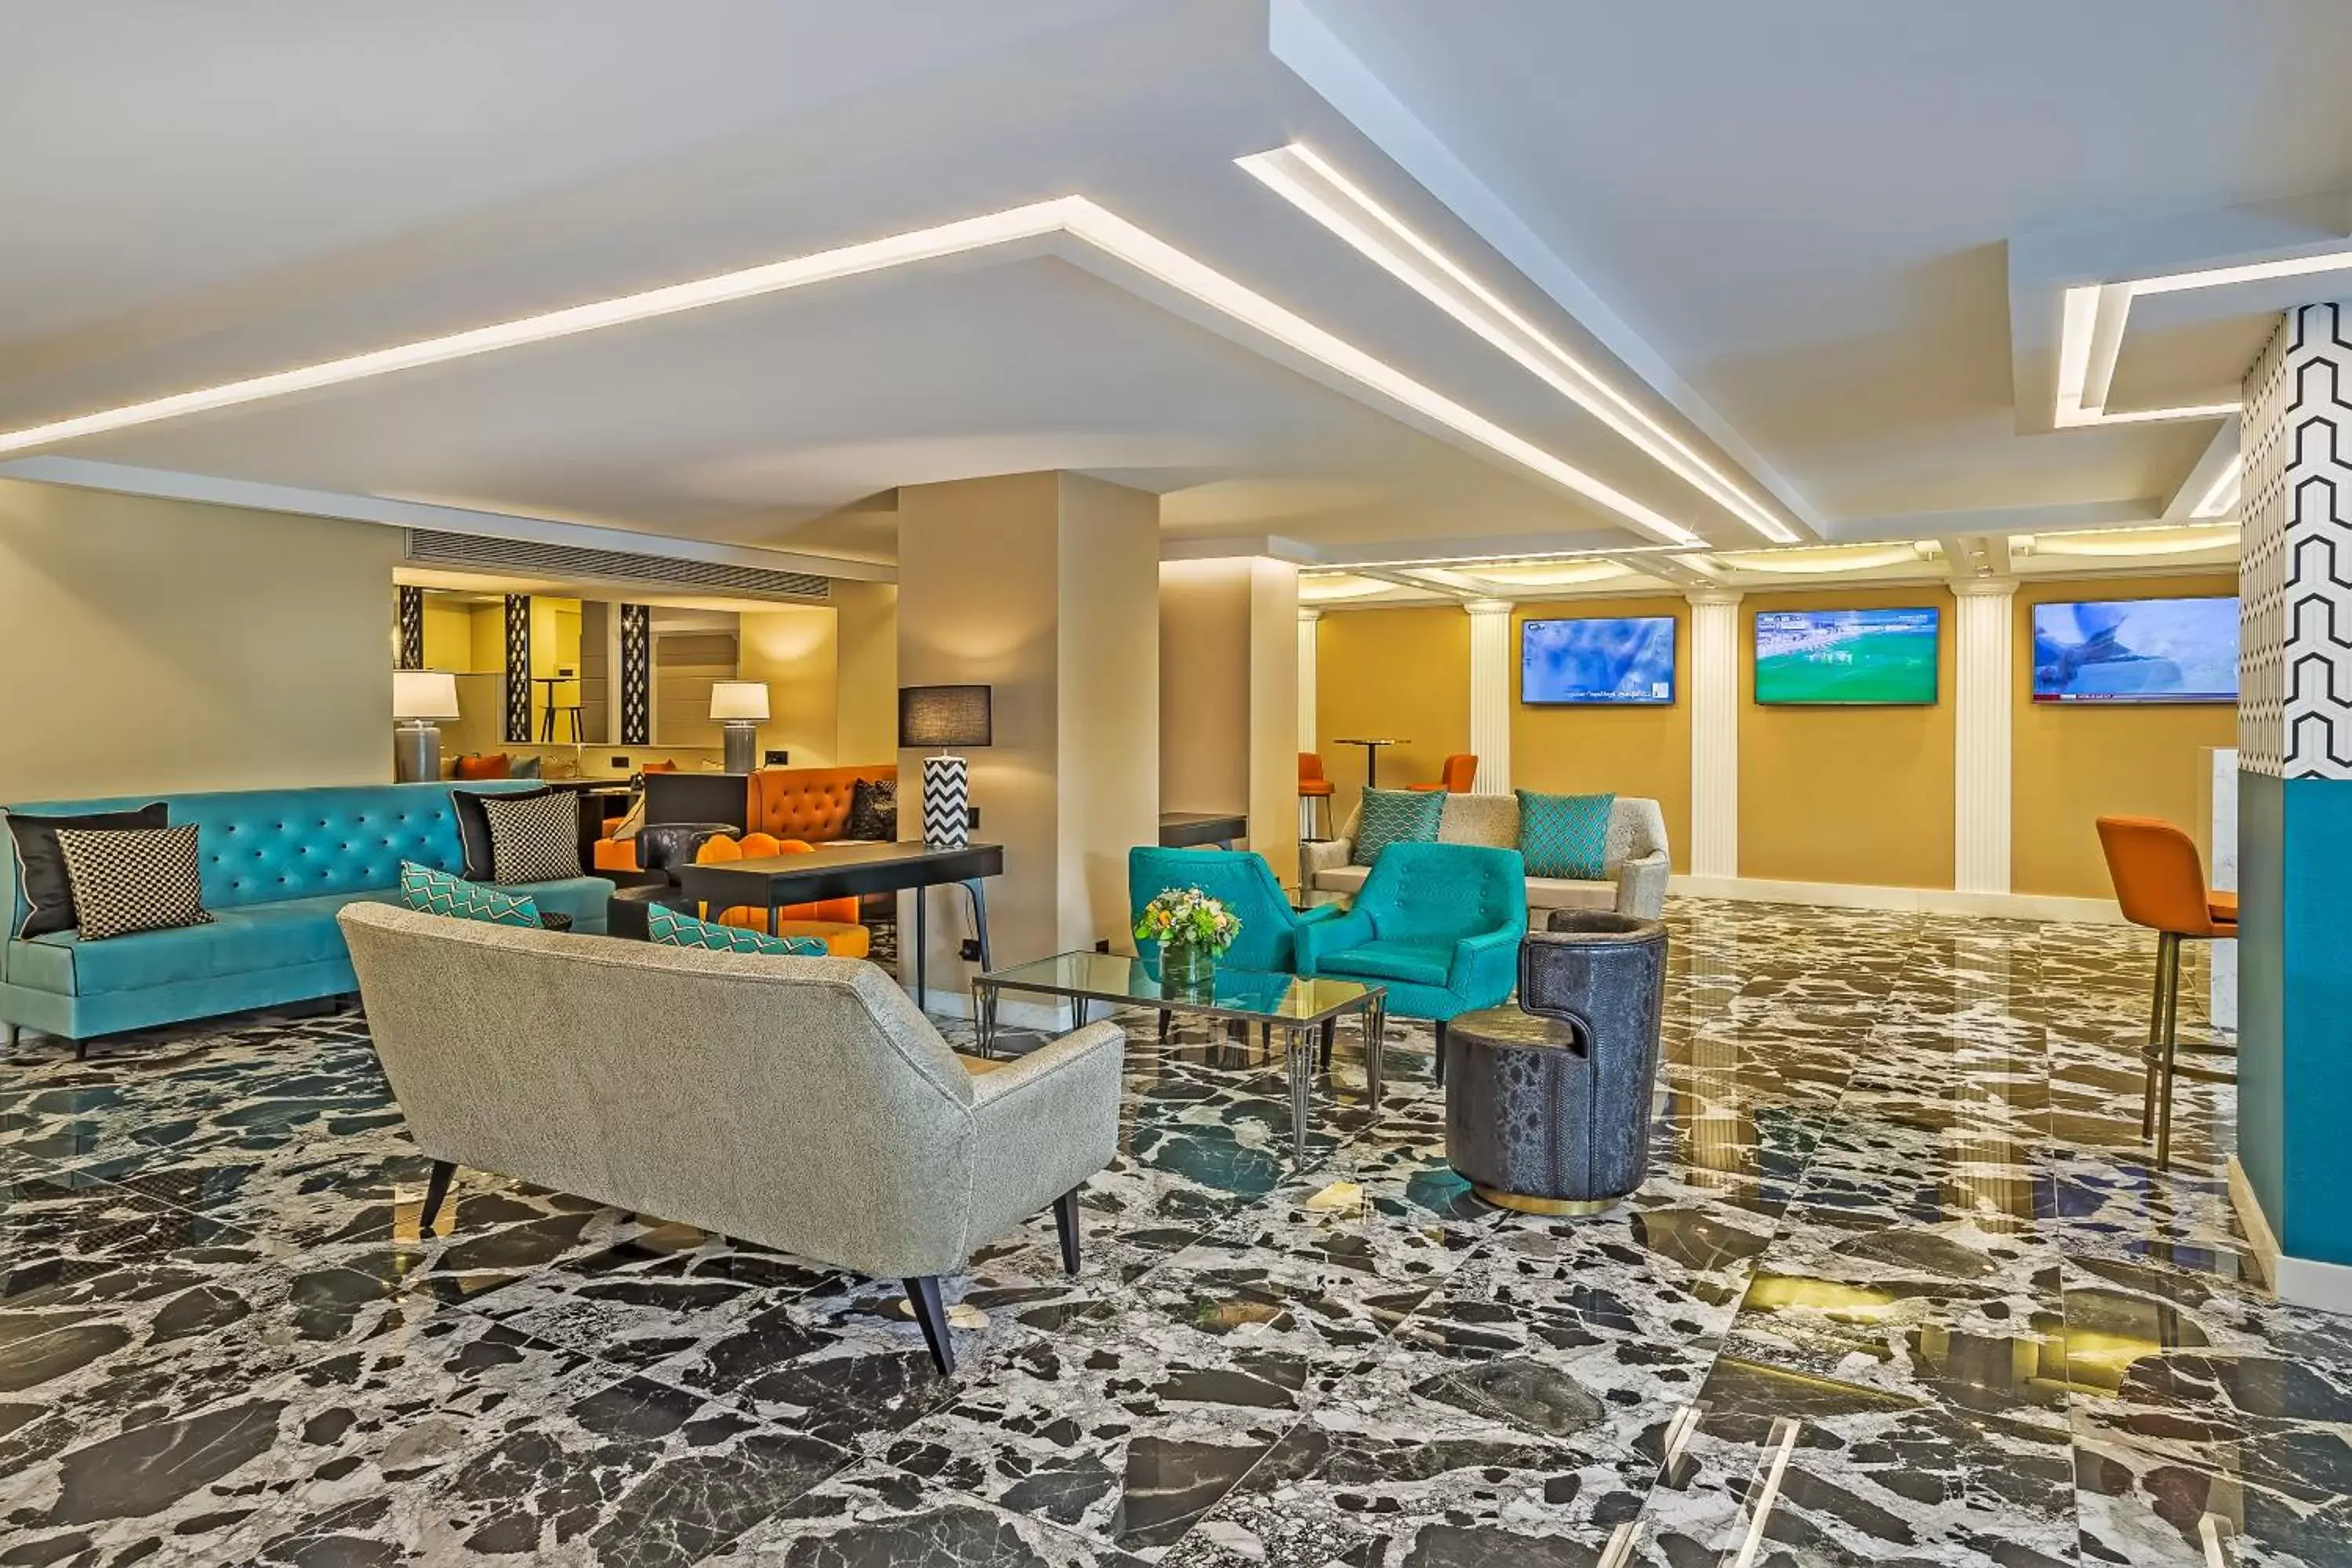 Lobby or reception in Airotel Stratos Vassilikos Hotel